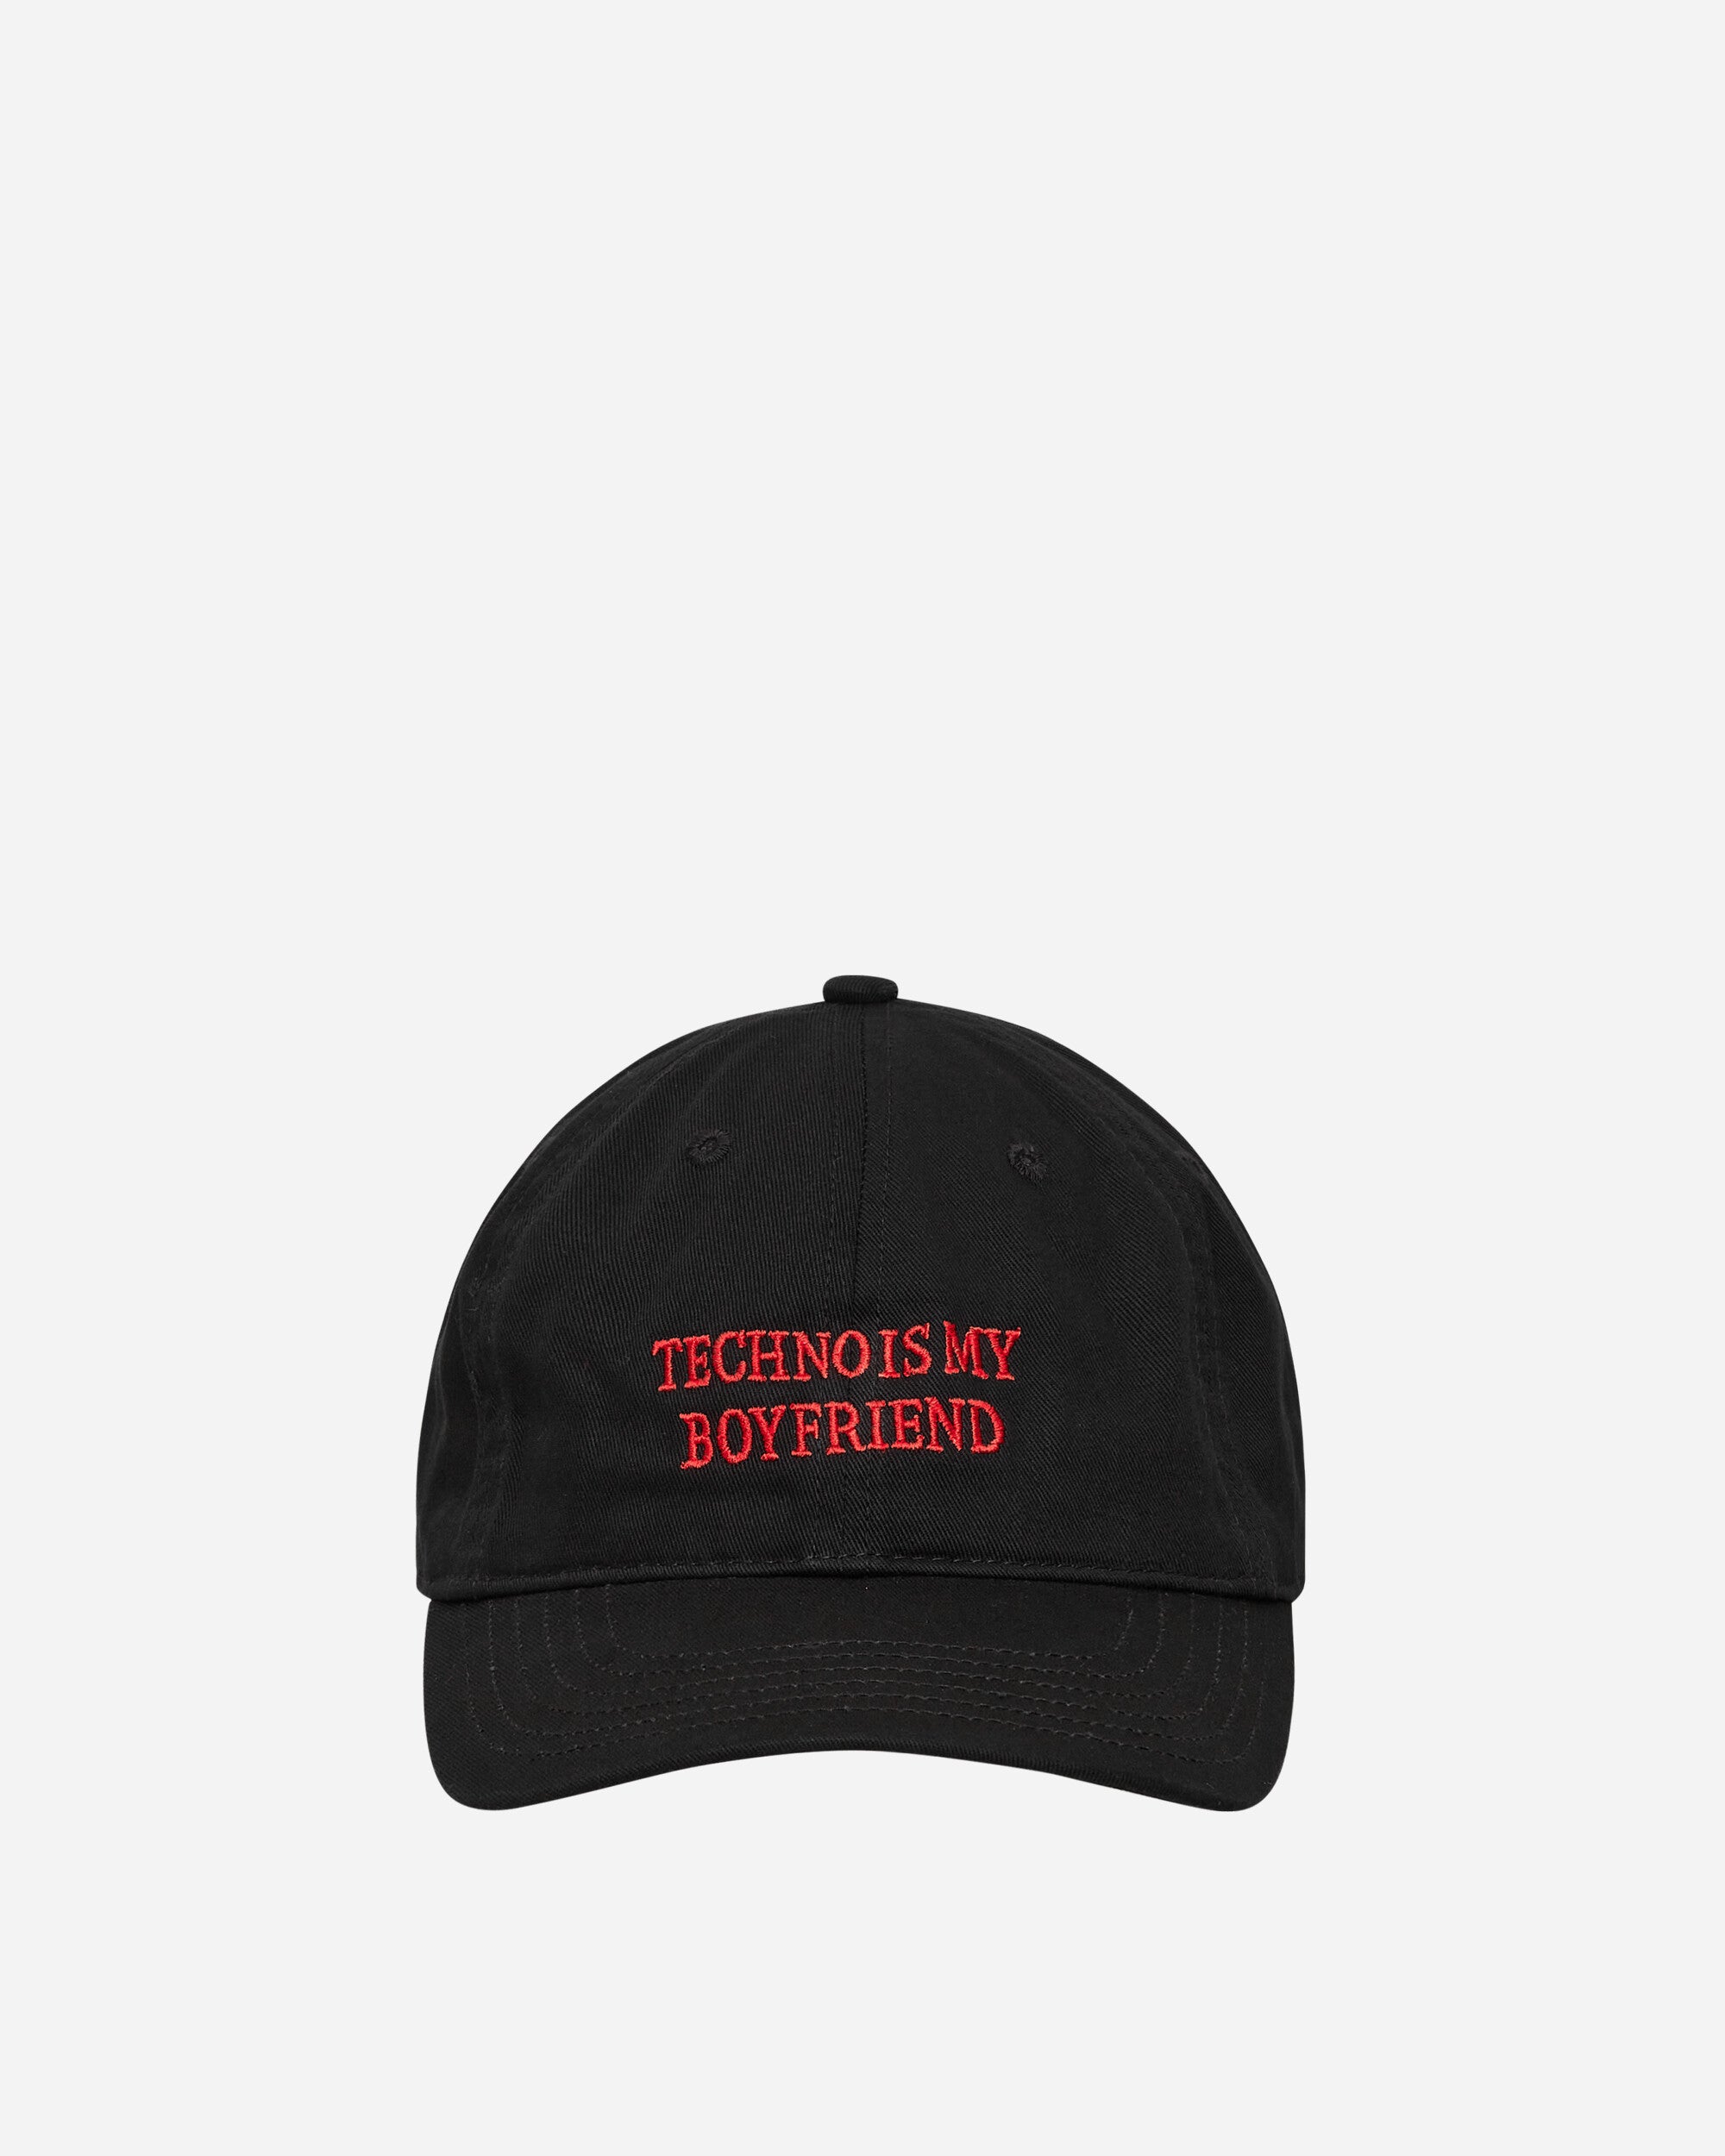 Techno Is My Boyfriend Hat Black